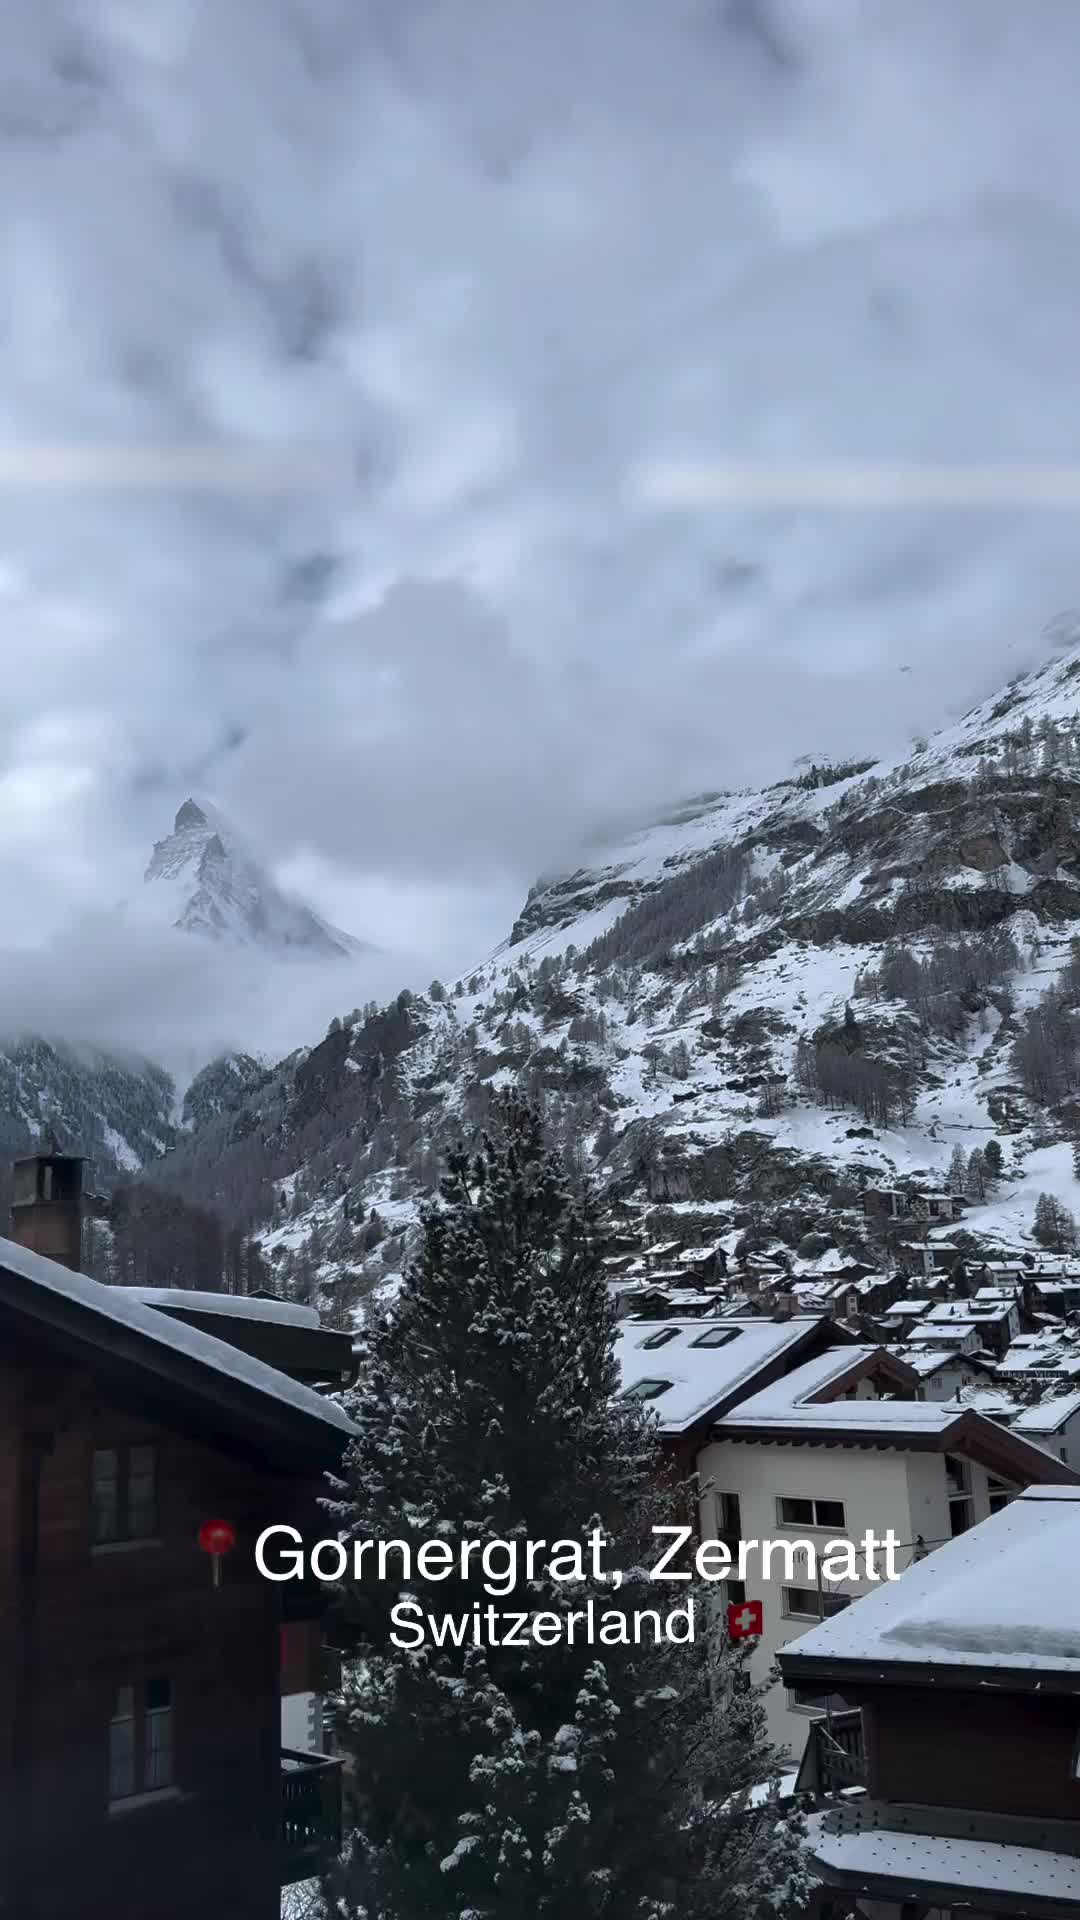 Iconic Gornergrat Railway Ride in Swiss Alps